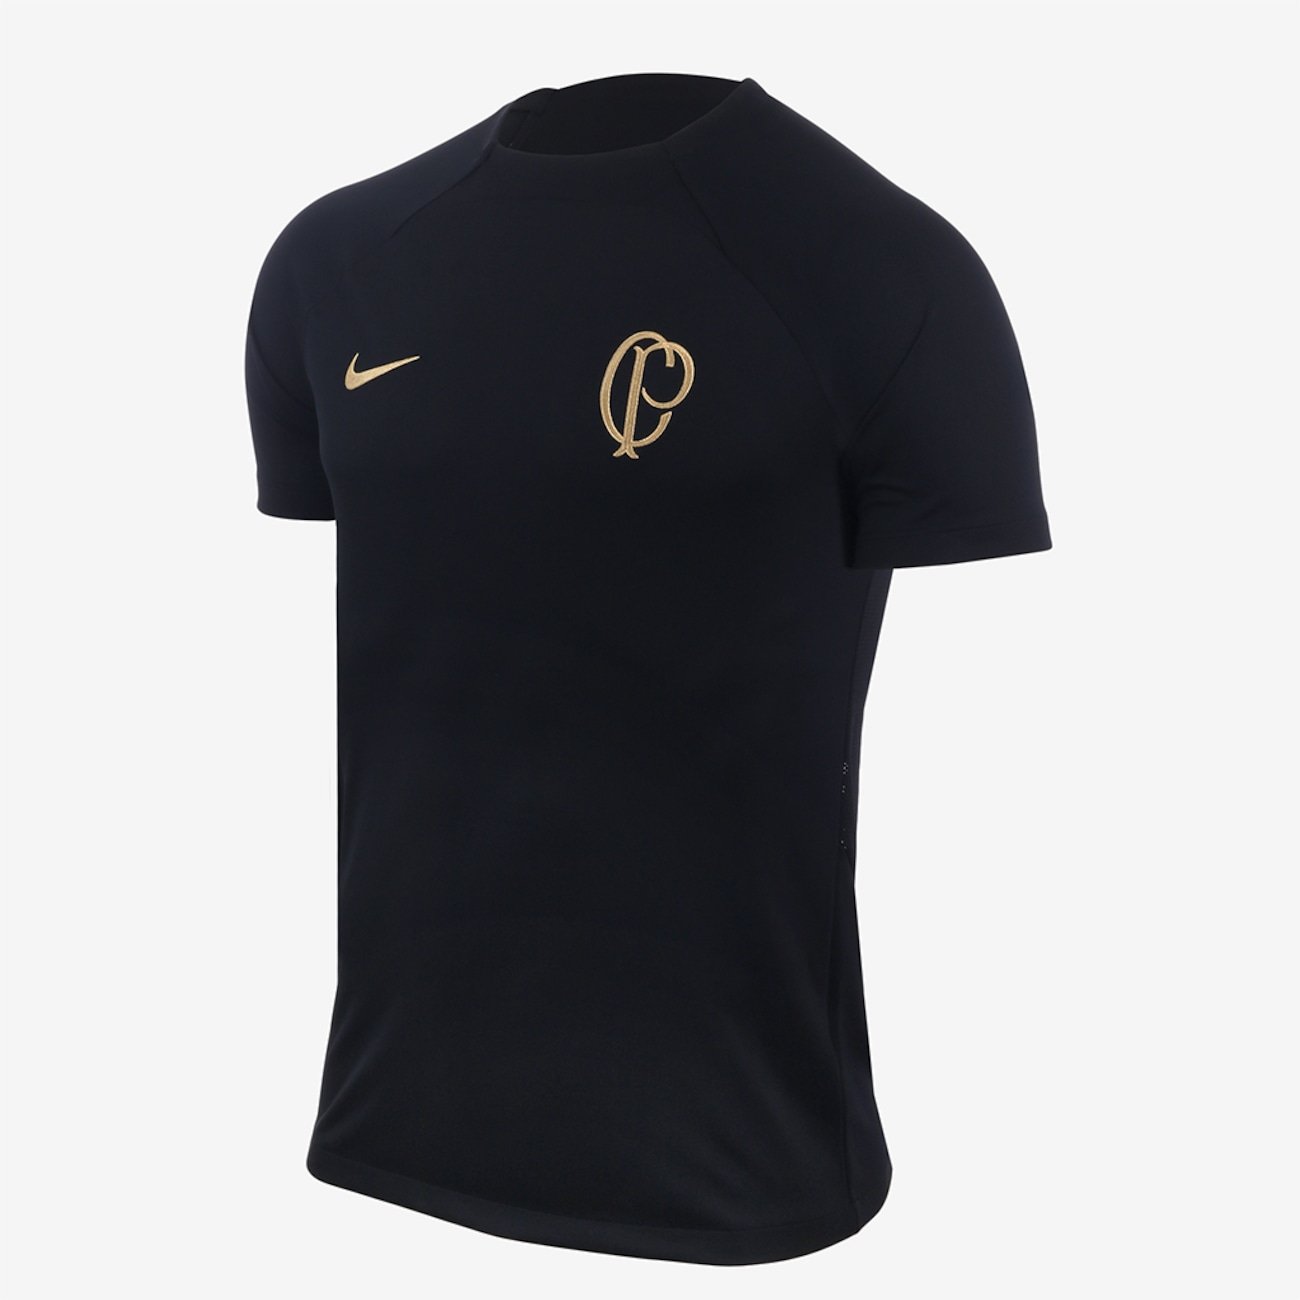 Camiseta Nike Pró - Masculina